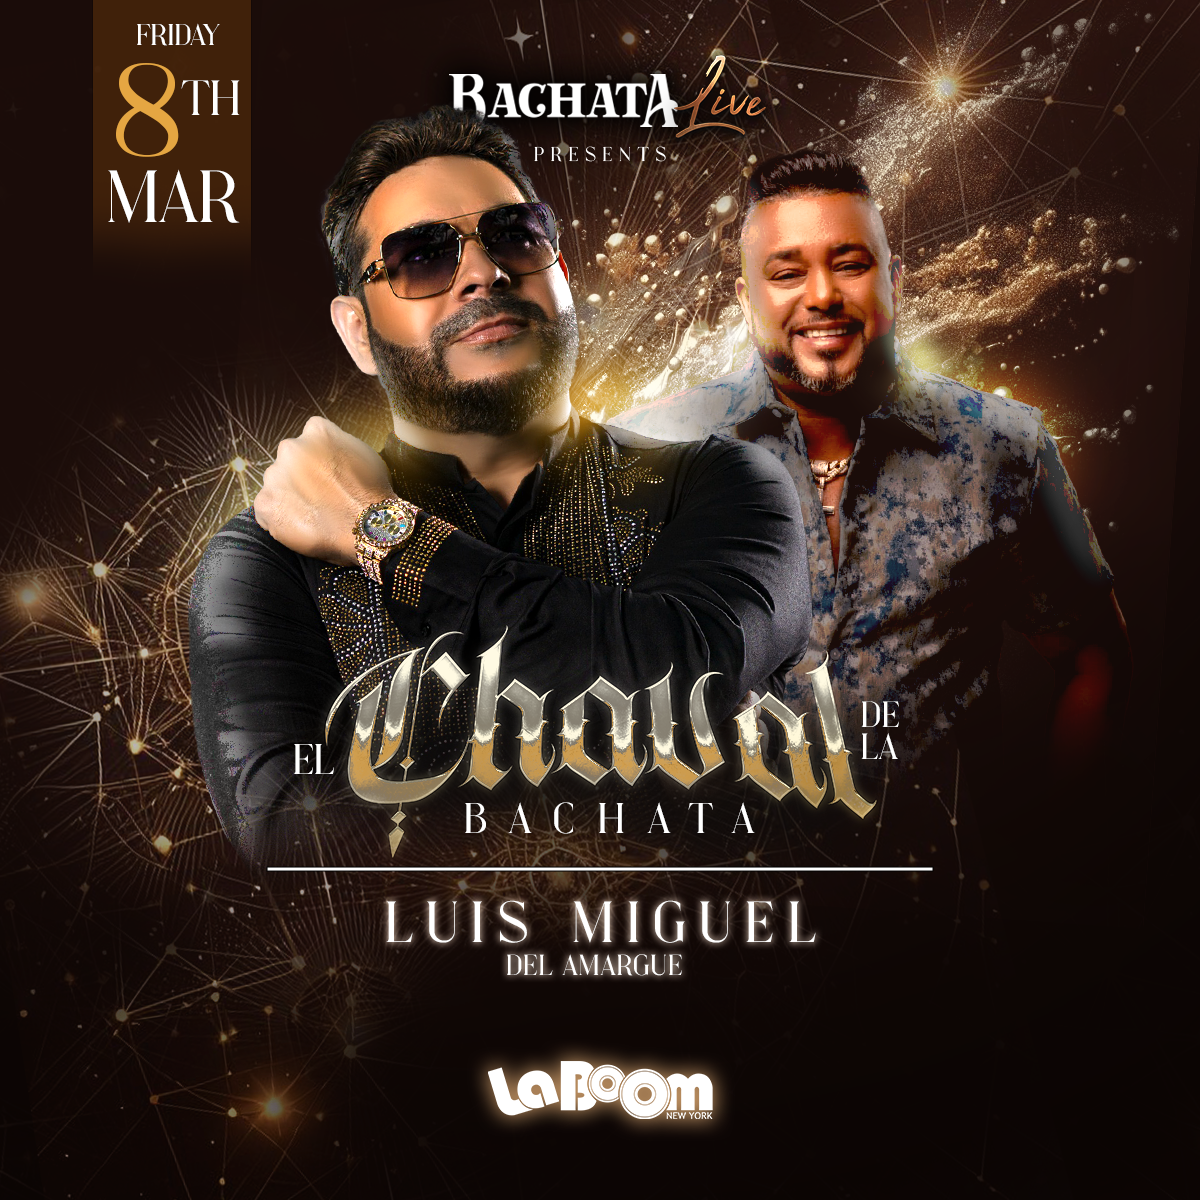 BACHATA LIVE!! W/ El Chaval de La Bachata & Luis Miguel Del Amargue –  LABOOM NEW YORK